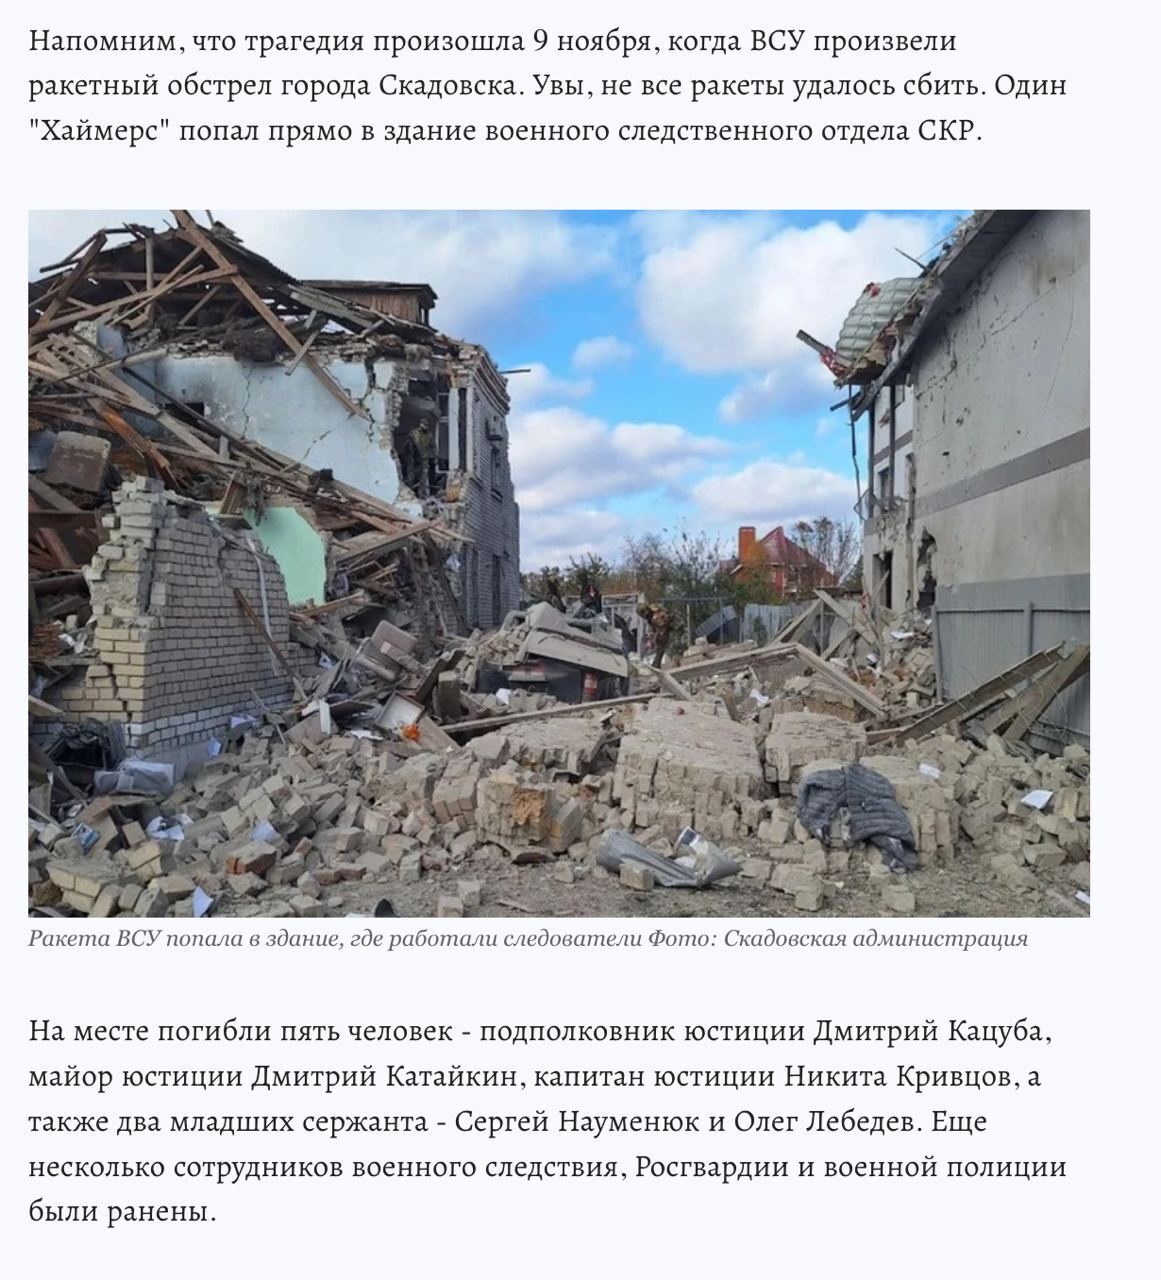 Russian propaganda data on the hit in Skadovsk on November 9